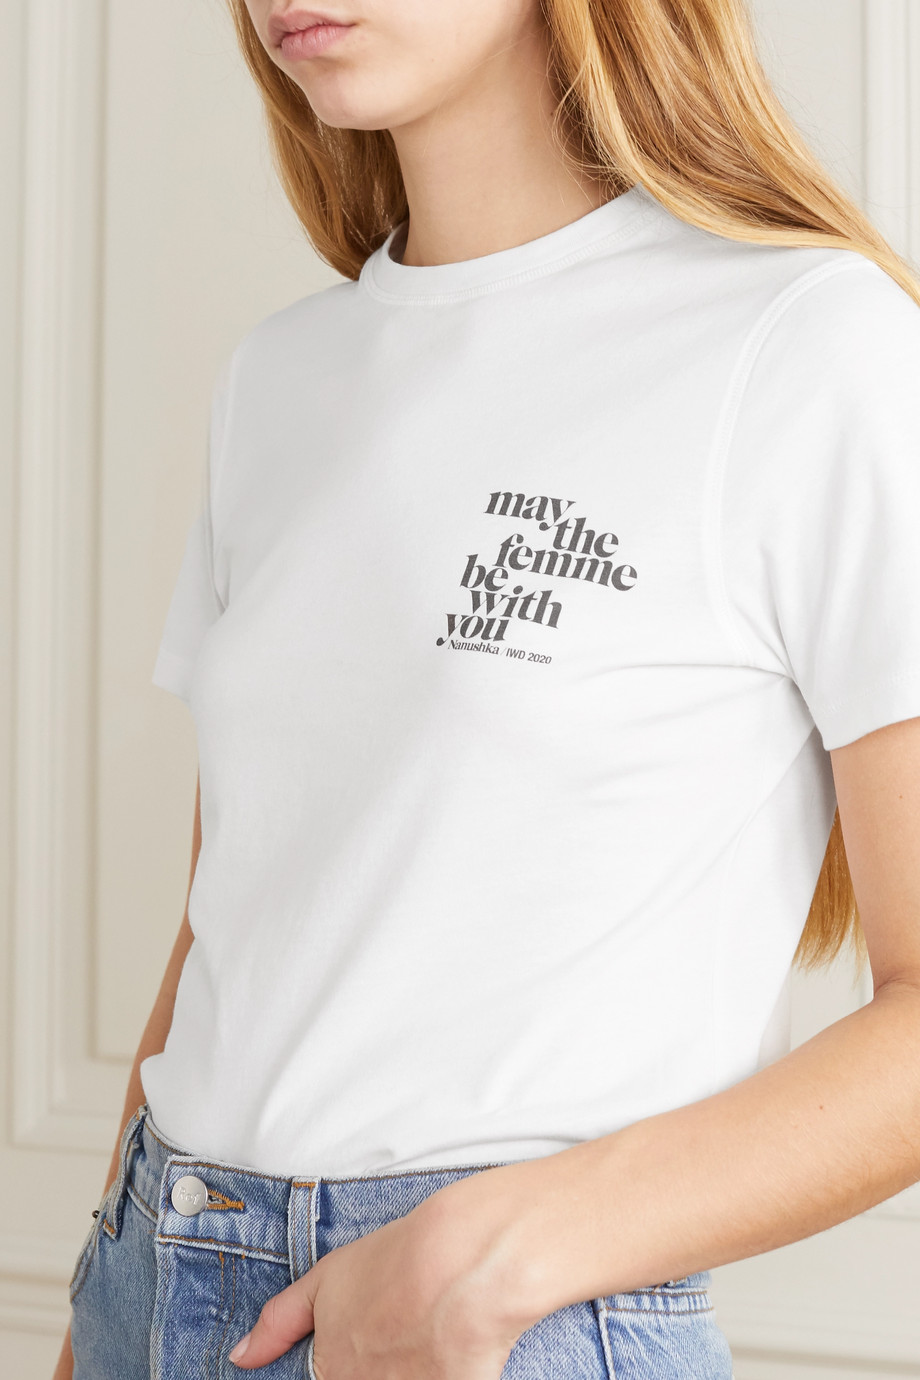 Net-a-Porter x Nanushka International Women's Day T-shirt 2020.